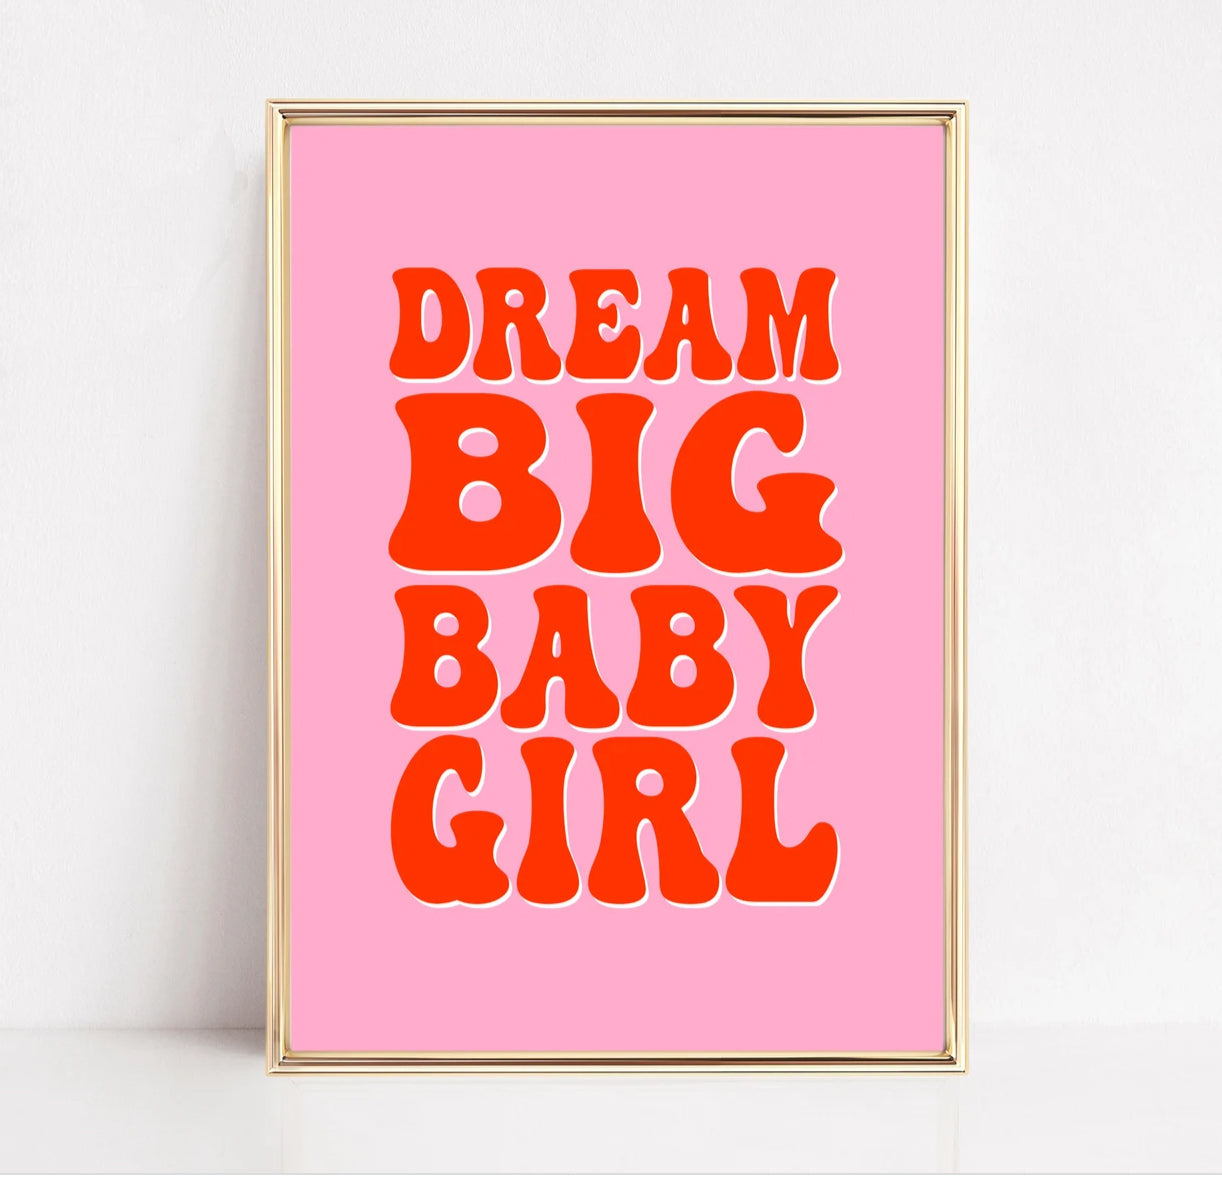 Dream big baby girl poster